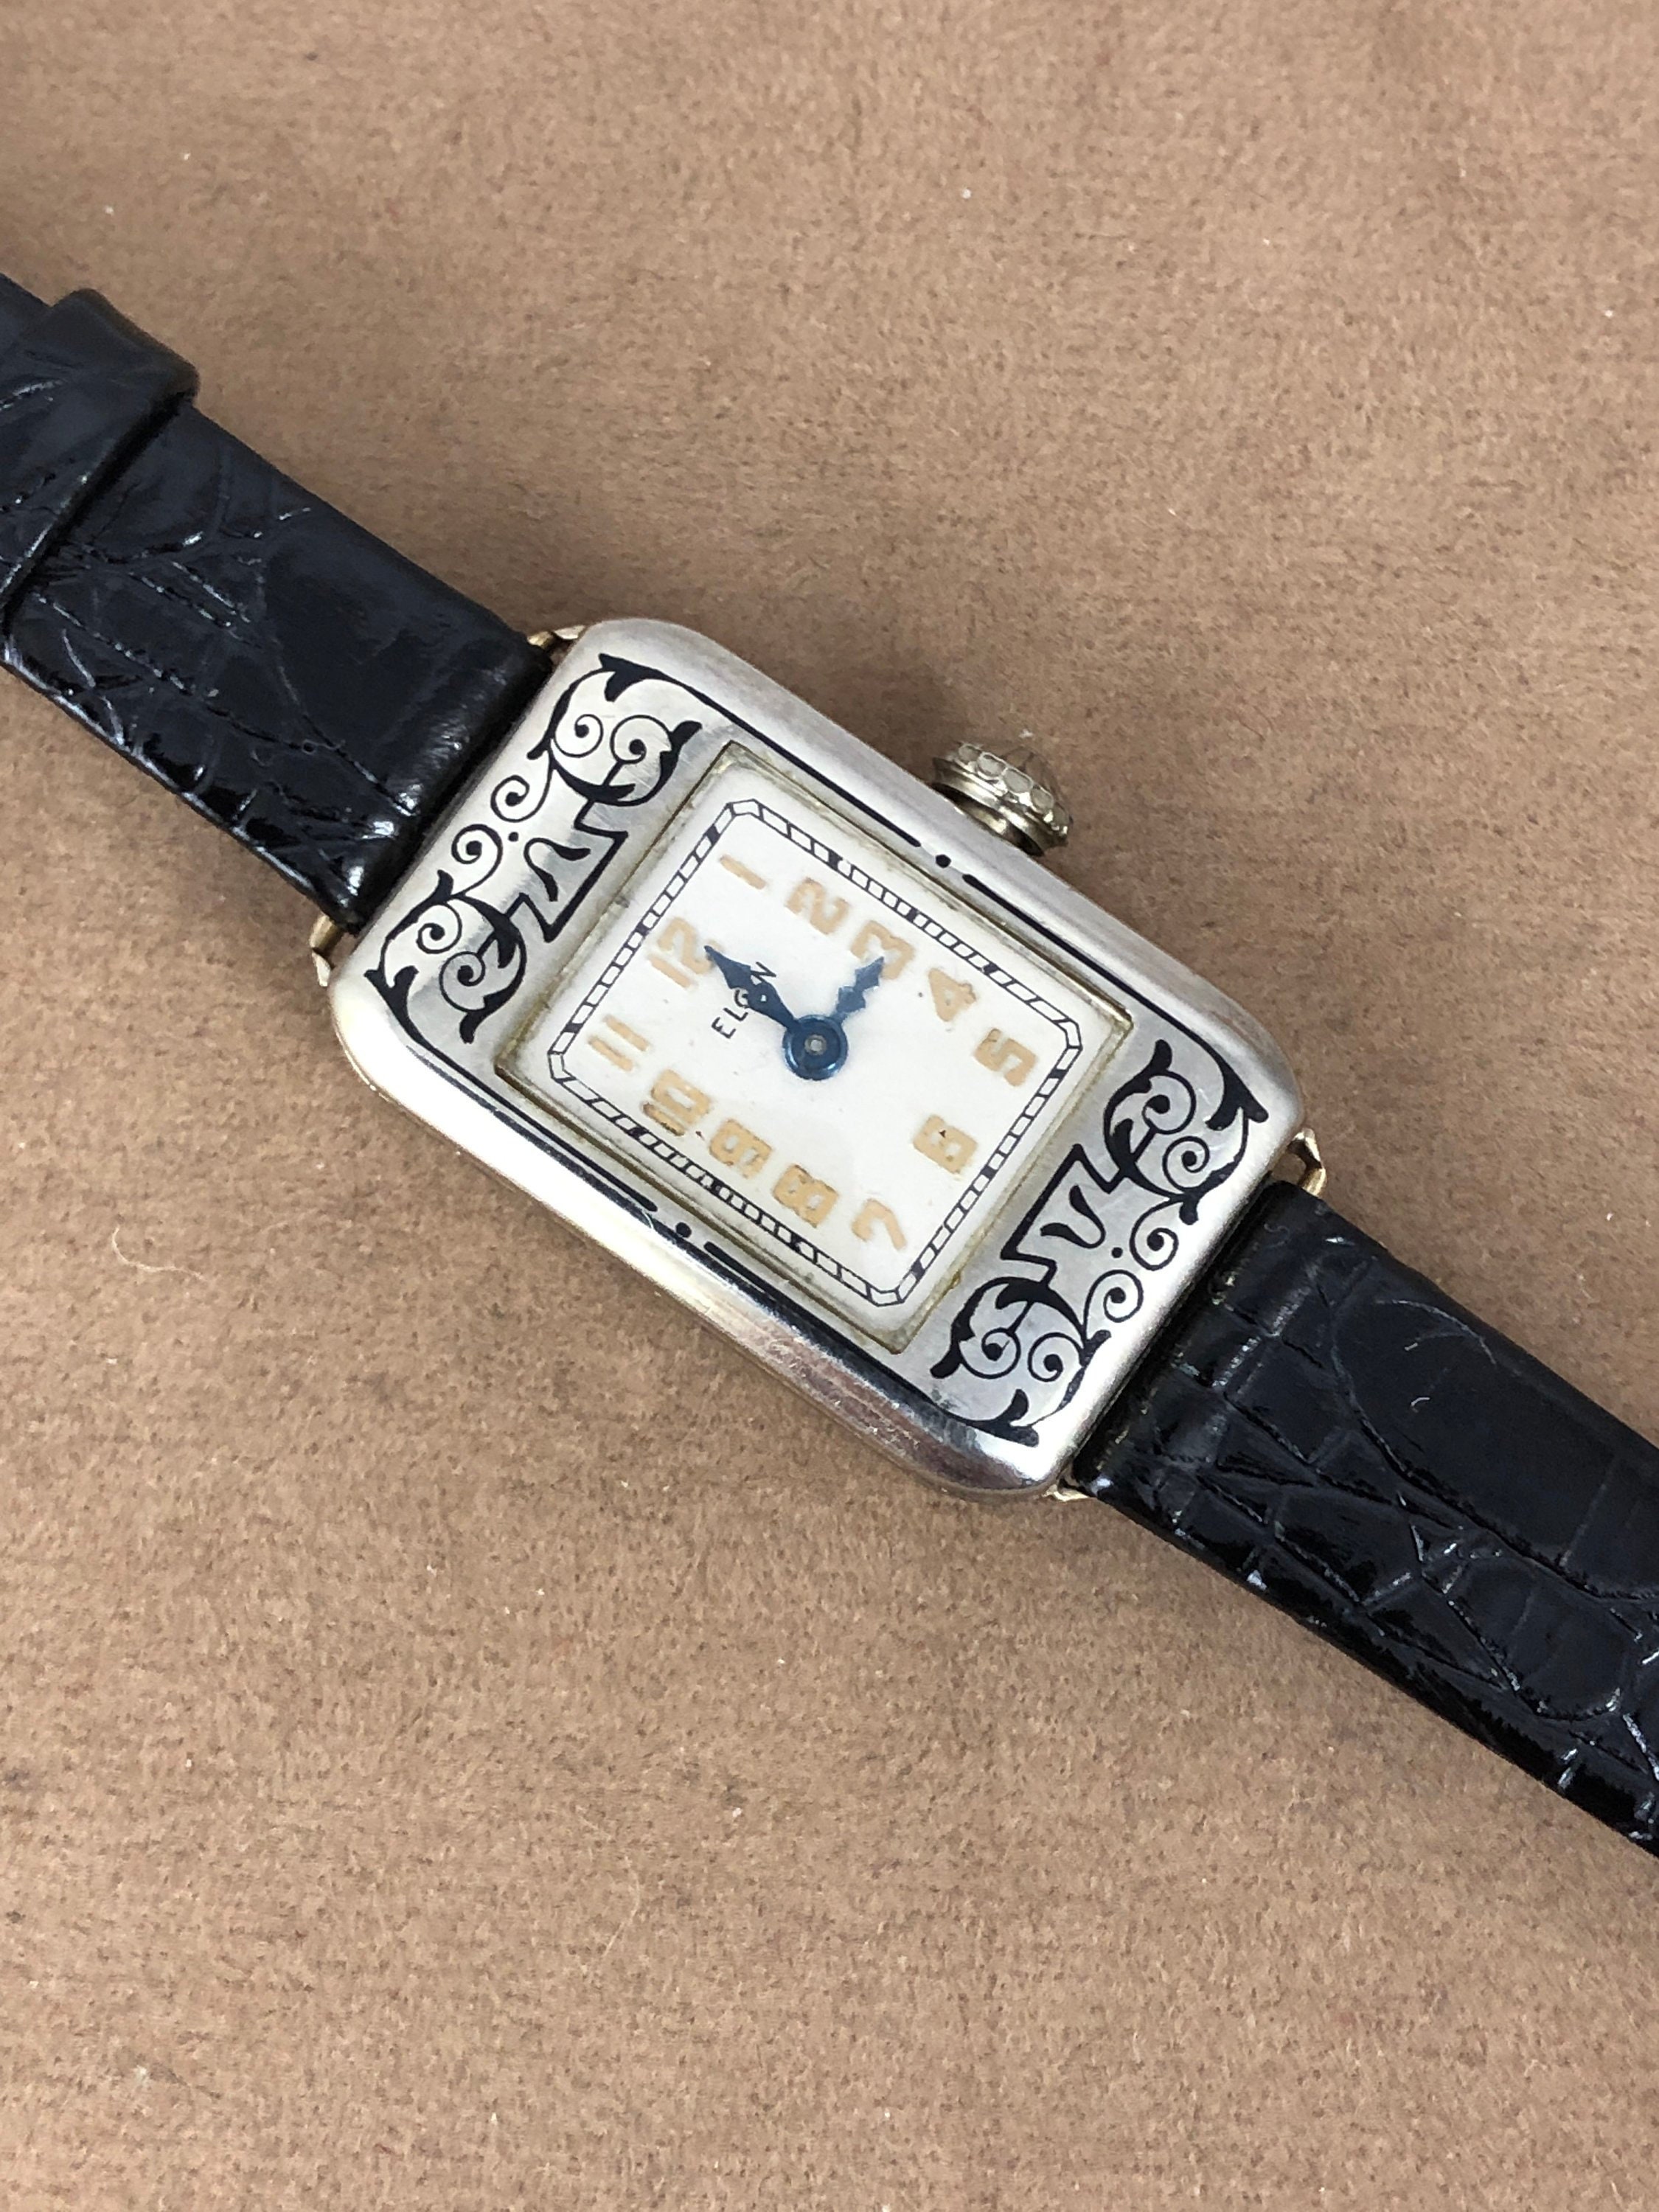 Cartier. A 14k Gold Art Deco Money Clip with Watch